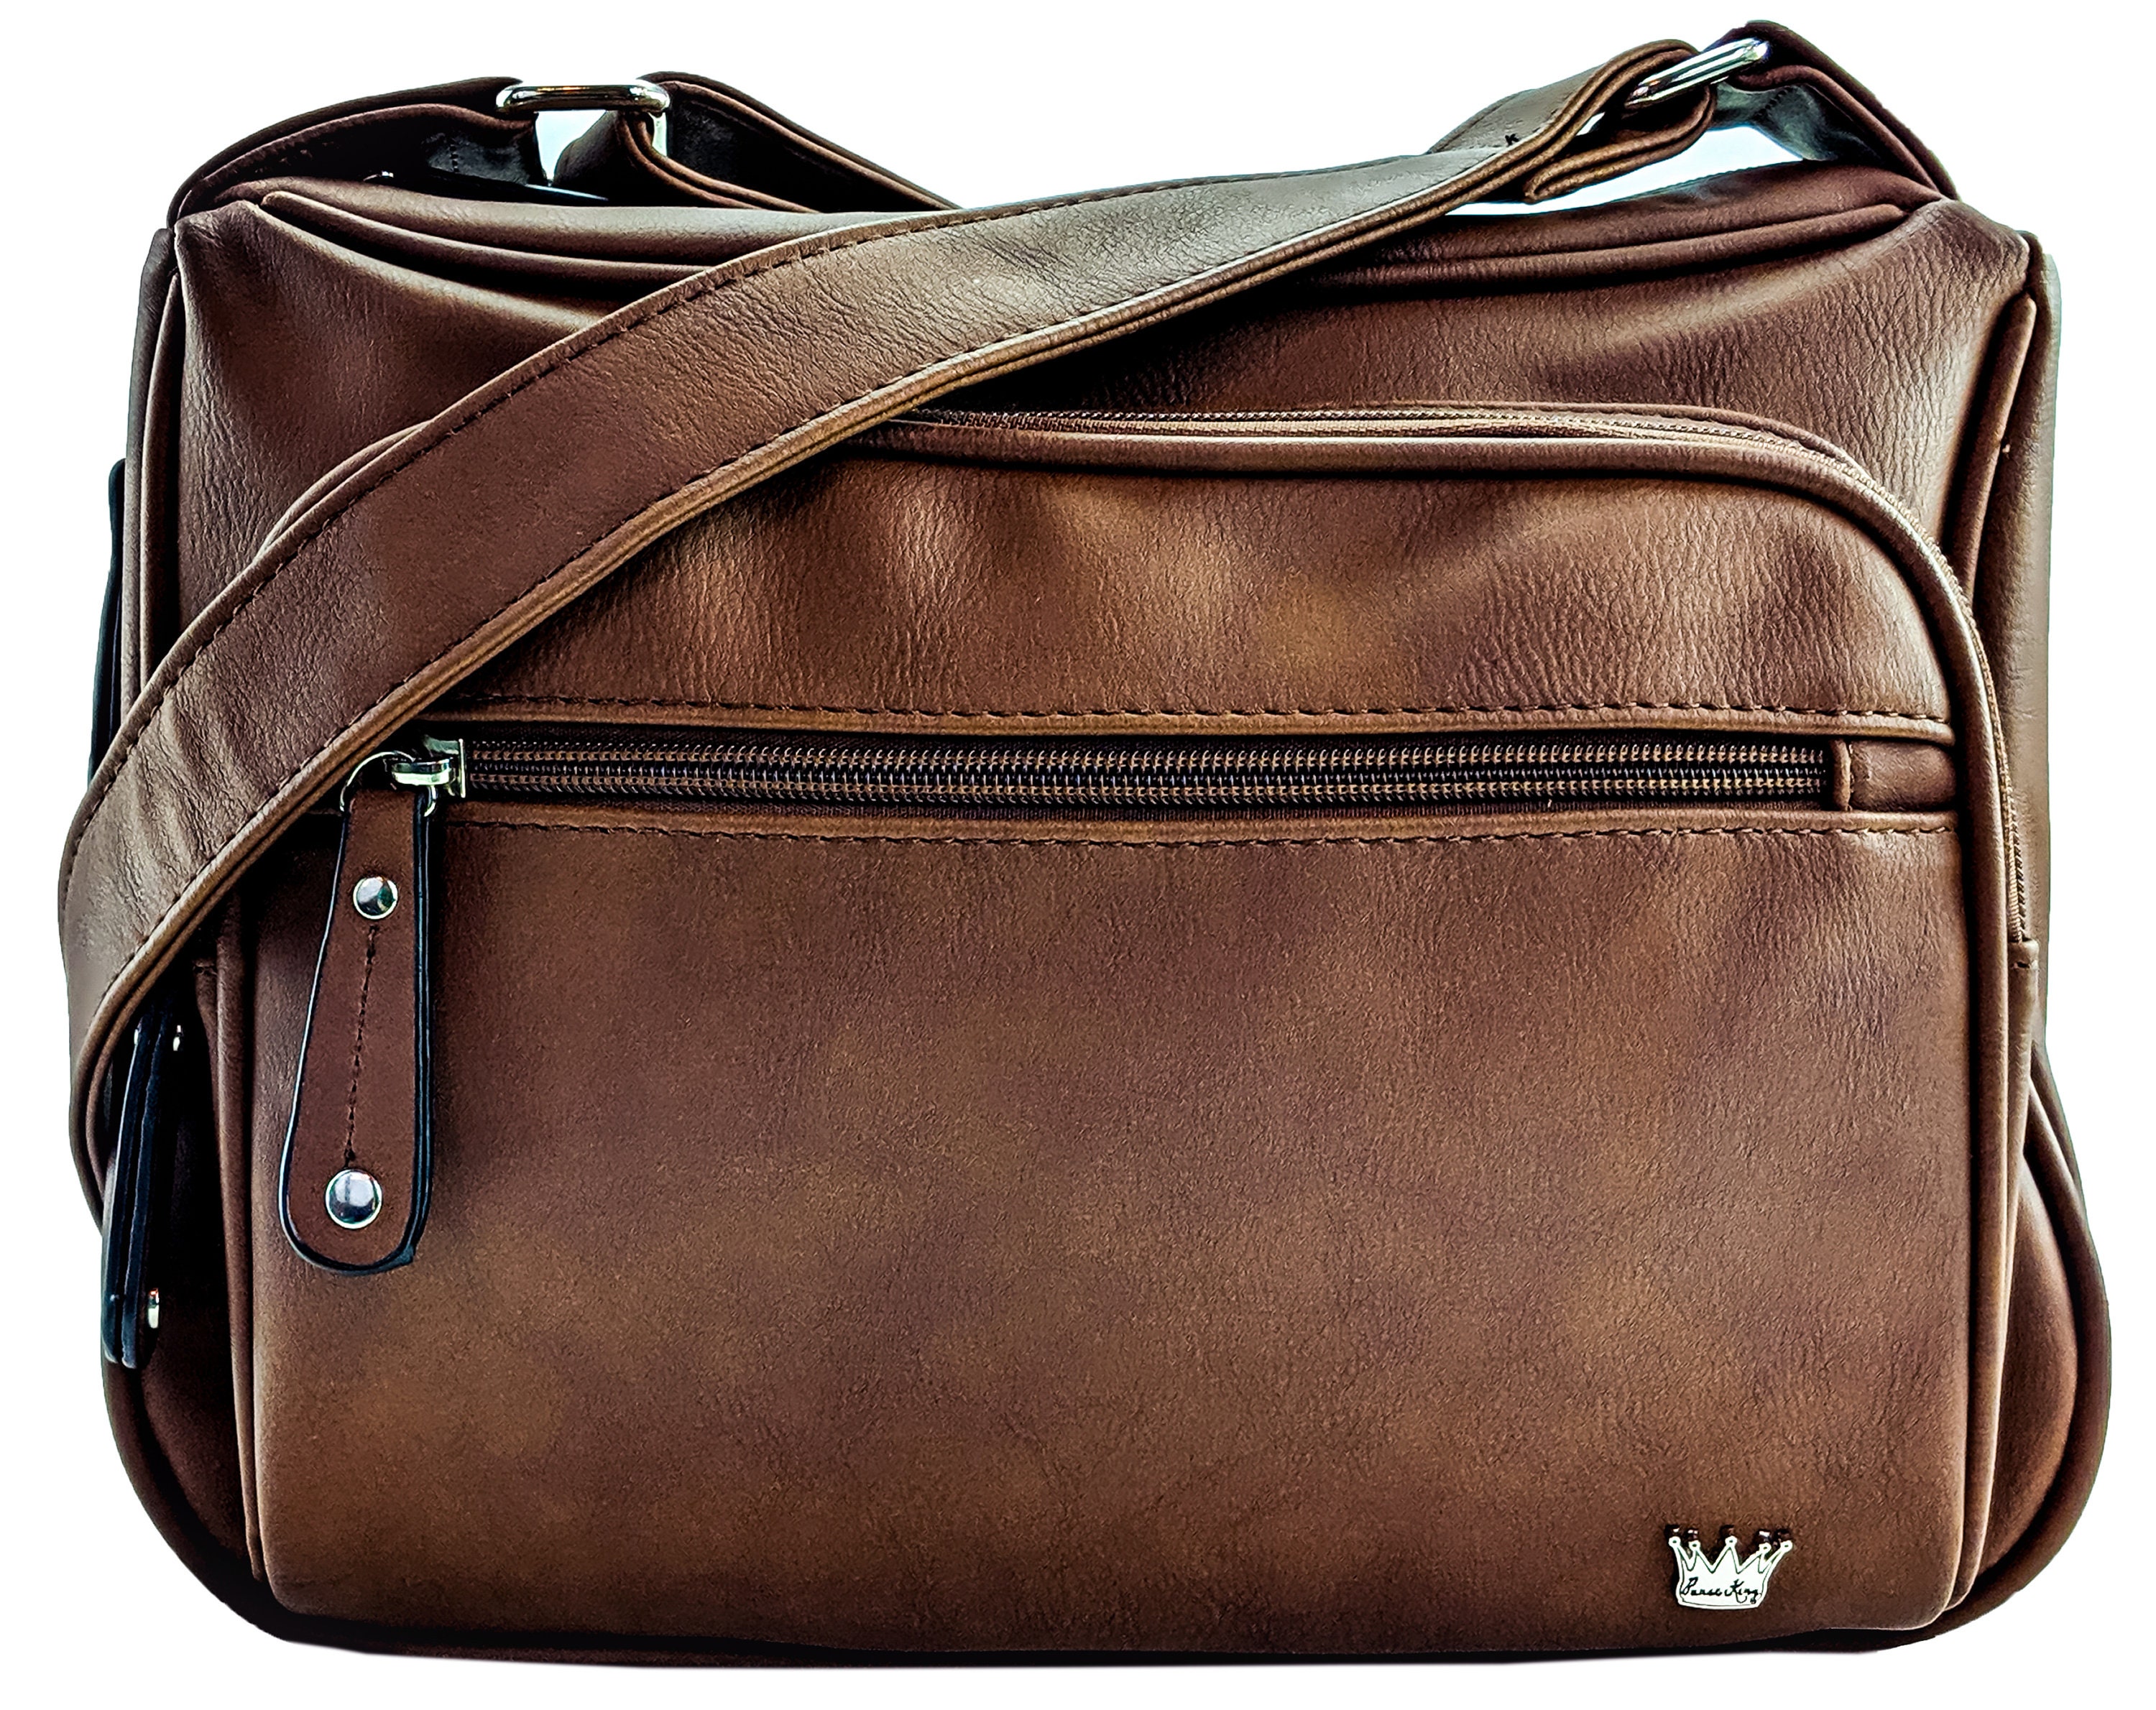 Concealed Carry Purse Firearm Tote Shoulder Bag CCW Top Handle Handbag 